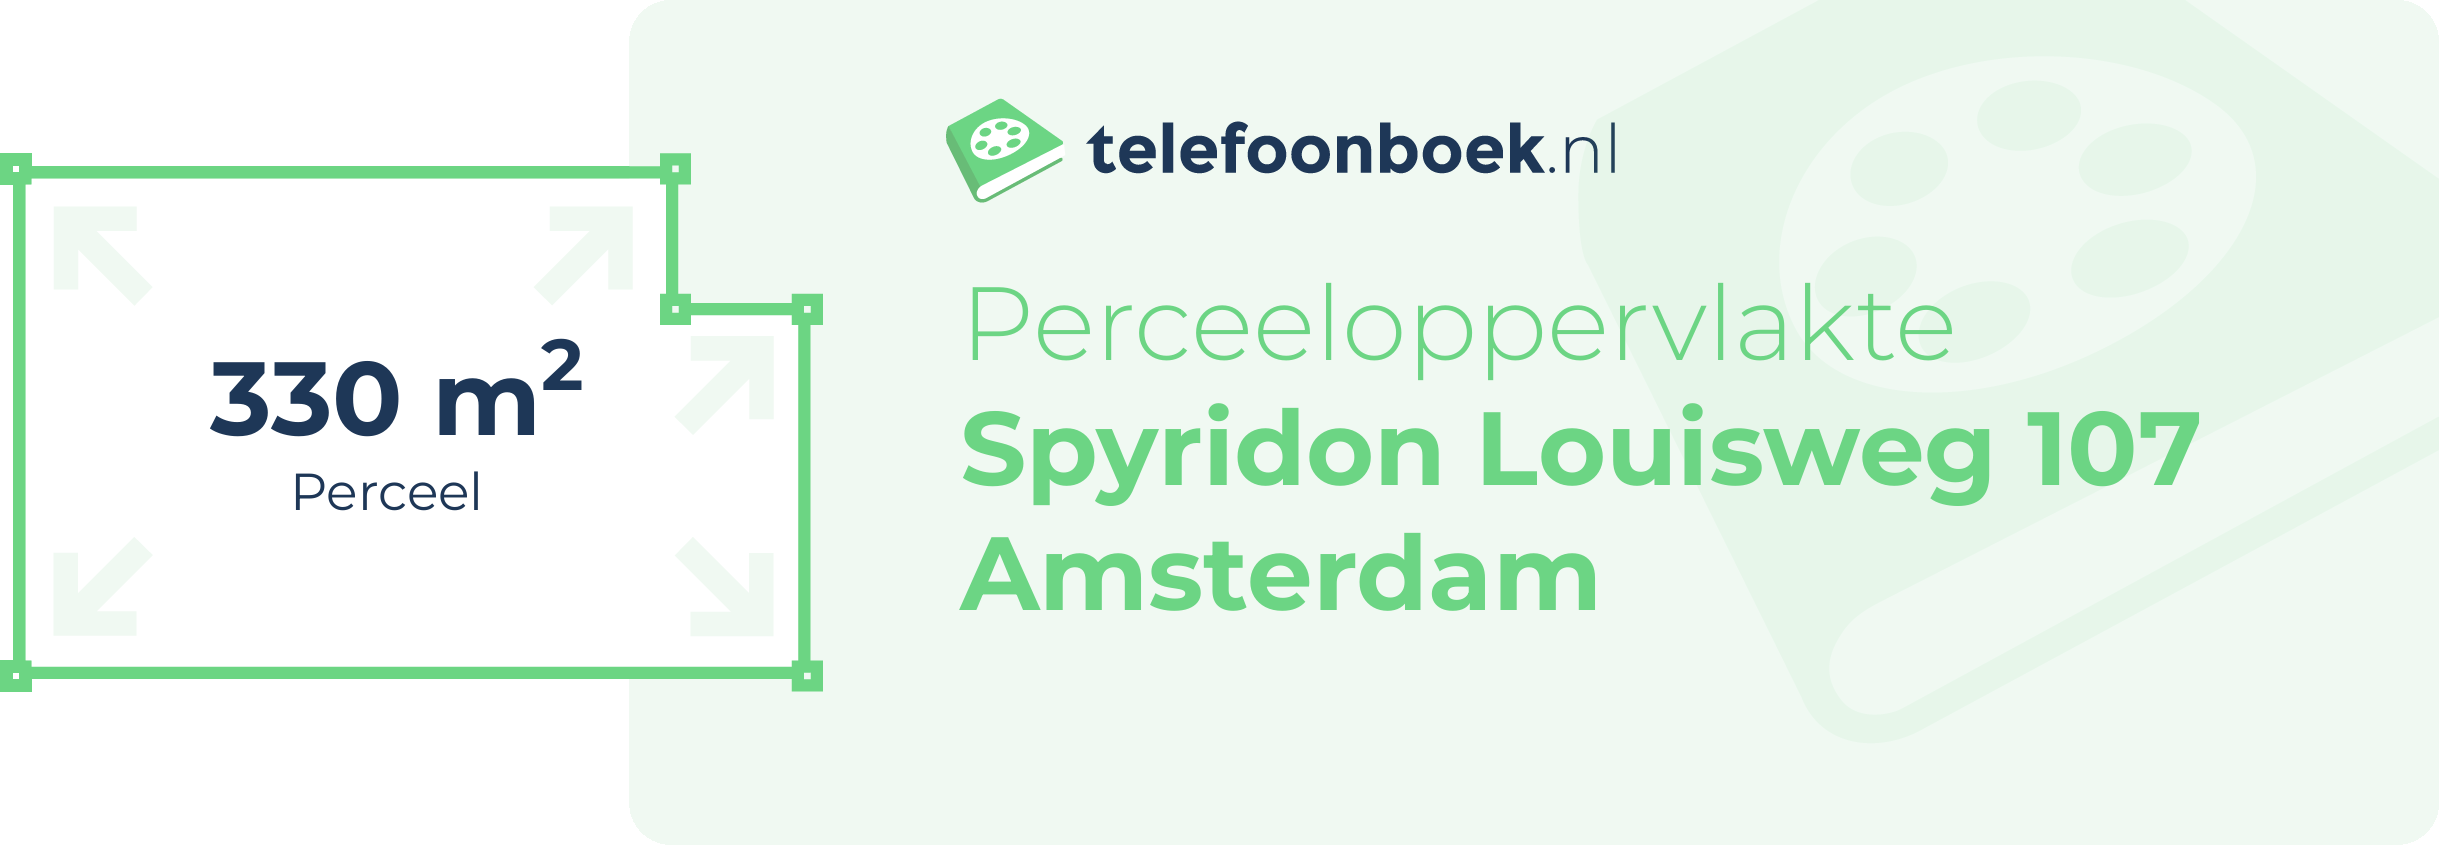 Perceeloppervlakte Spyridon Louisweg 107 Amsterdam